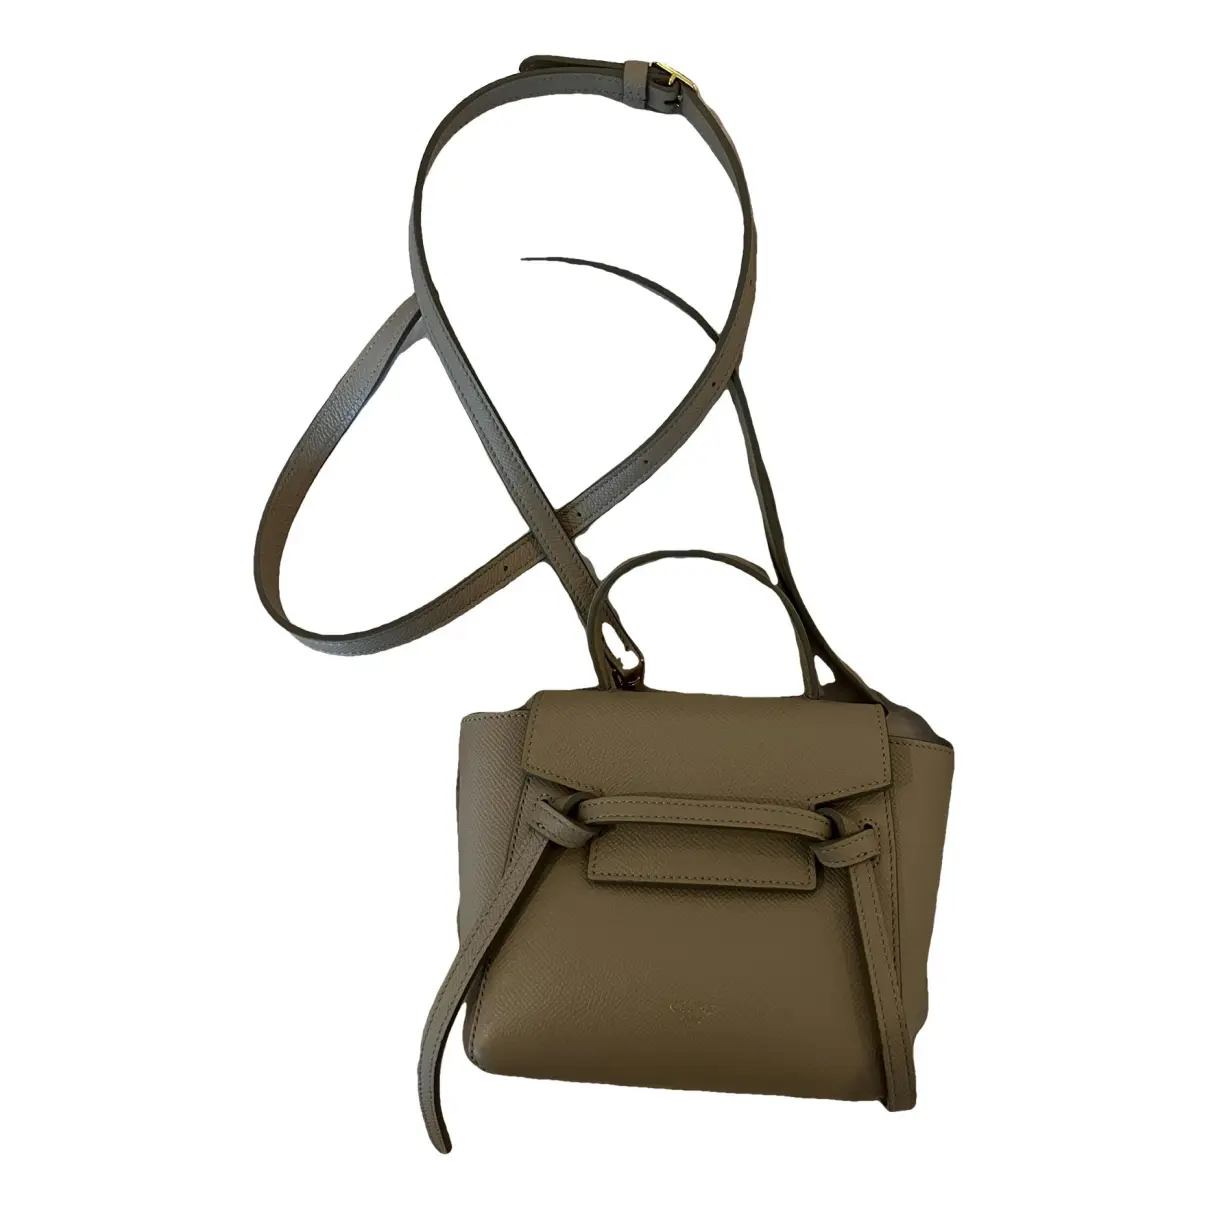 Belt leather handbag